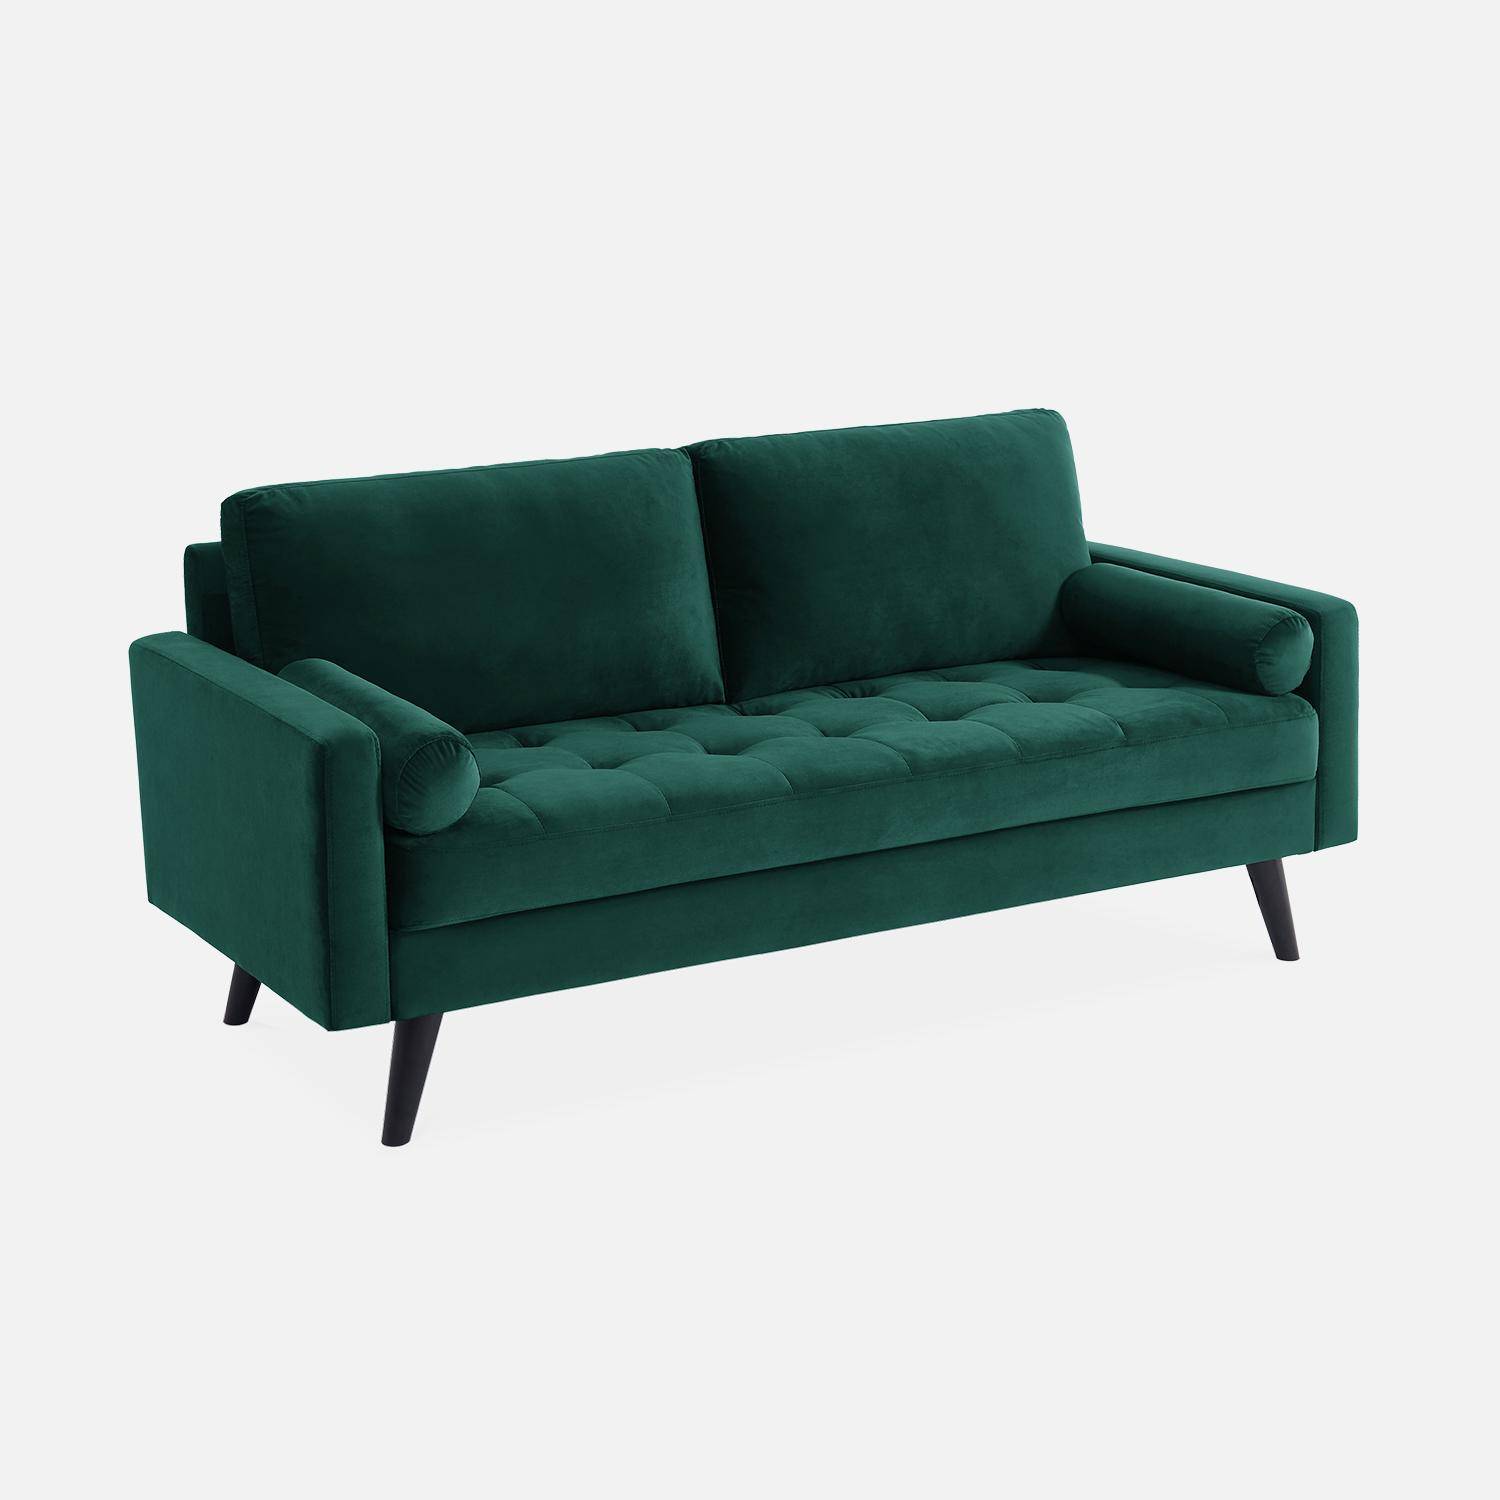 Velvet vintage style 3-seater sofa with Scandi style wooden legs - Ivar - Green Photo2